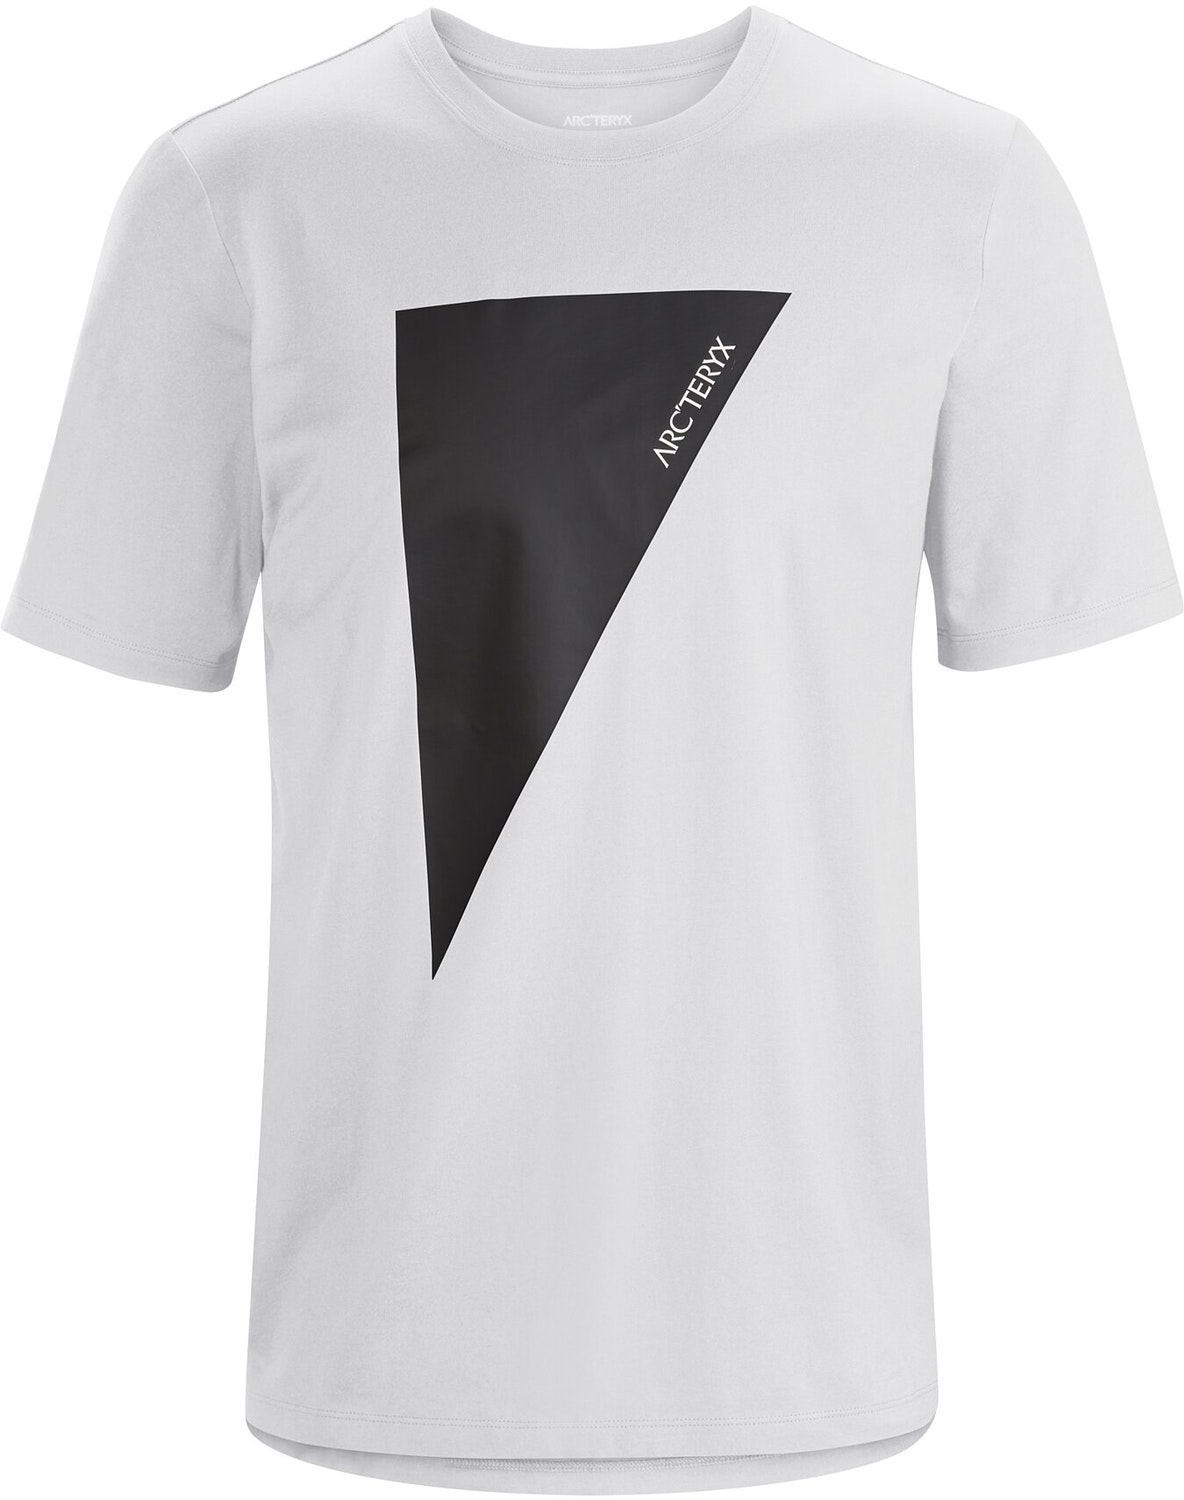 T-shirt Arc'teryx Arc'postrophe Word Uomo Bianche - IT-97693516